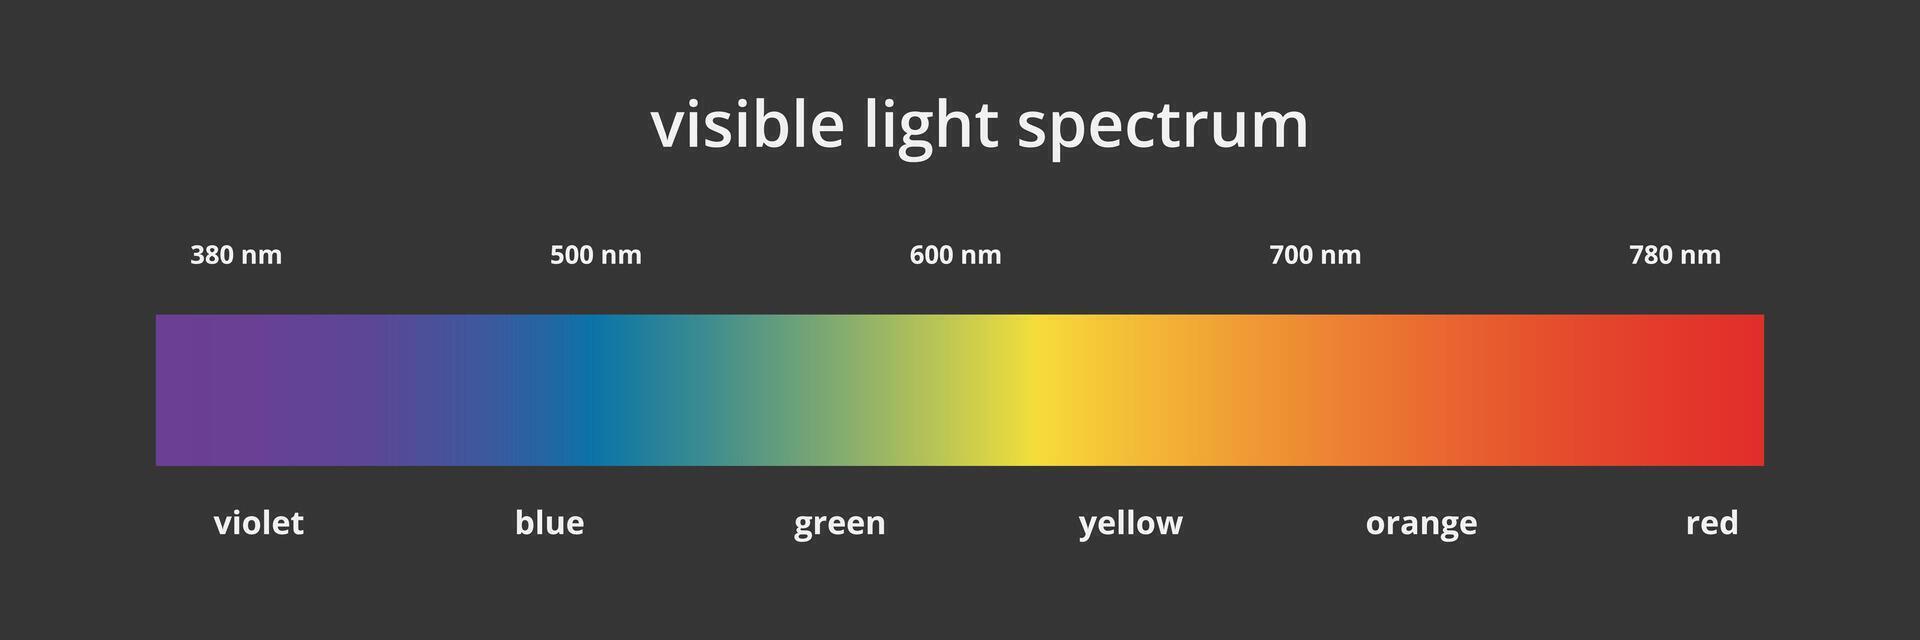 visível luz espectro infográfico. gradiente diagrama, eletromagnético visível cor para humano olho. vetor ilustração em Preto fundo